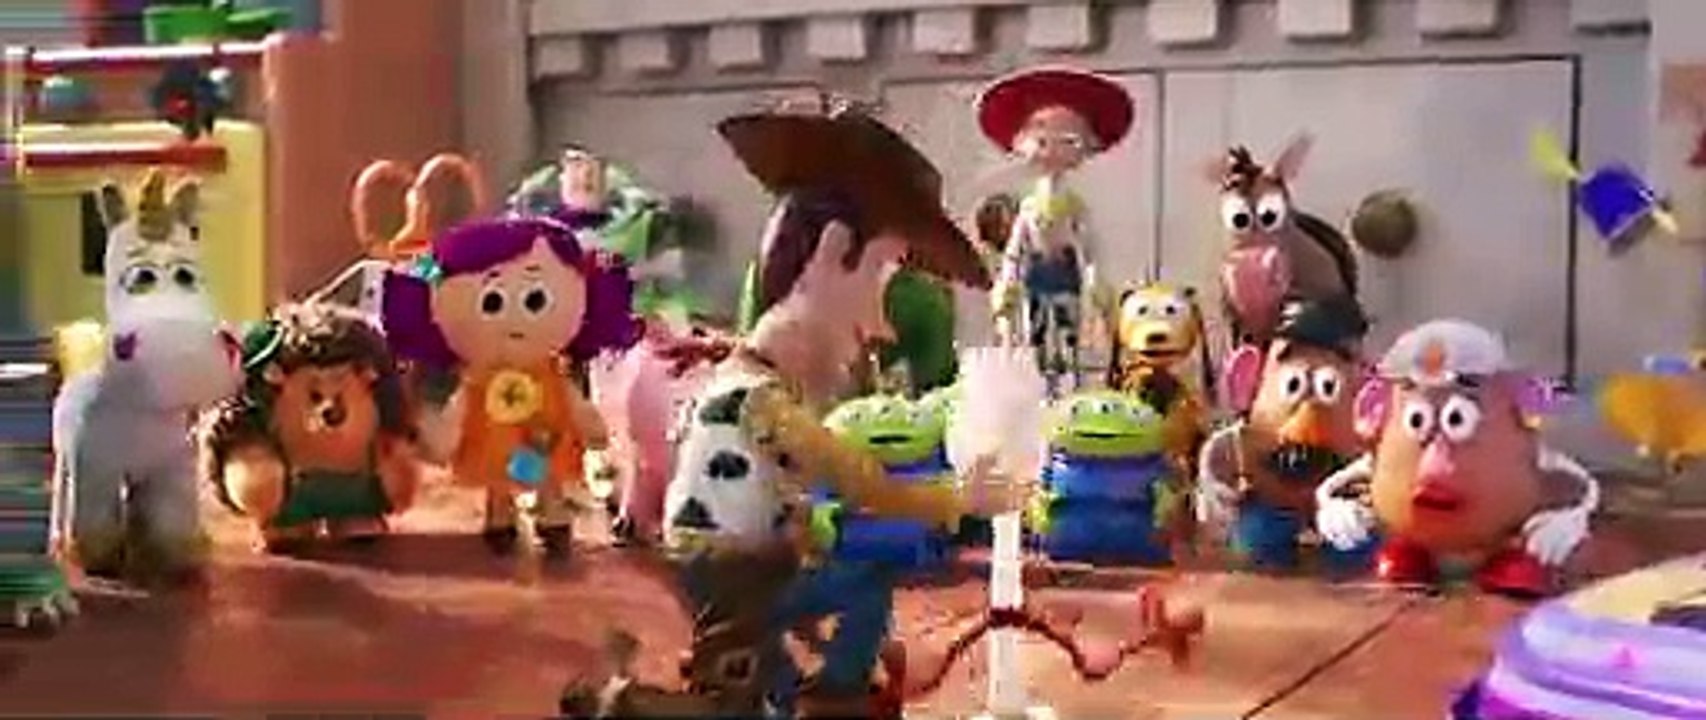 Toy Story 4 - Bonnie Makes Forky (Romanian) on Vimeo